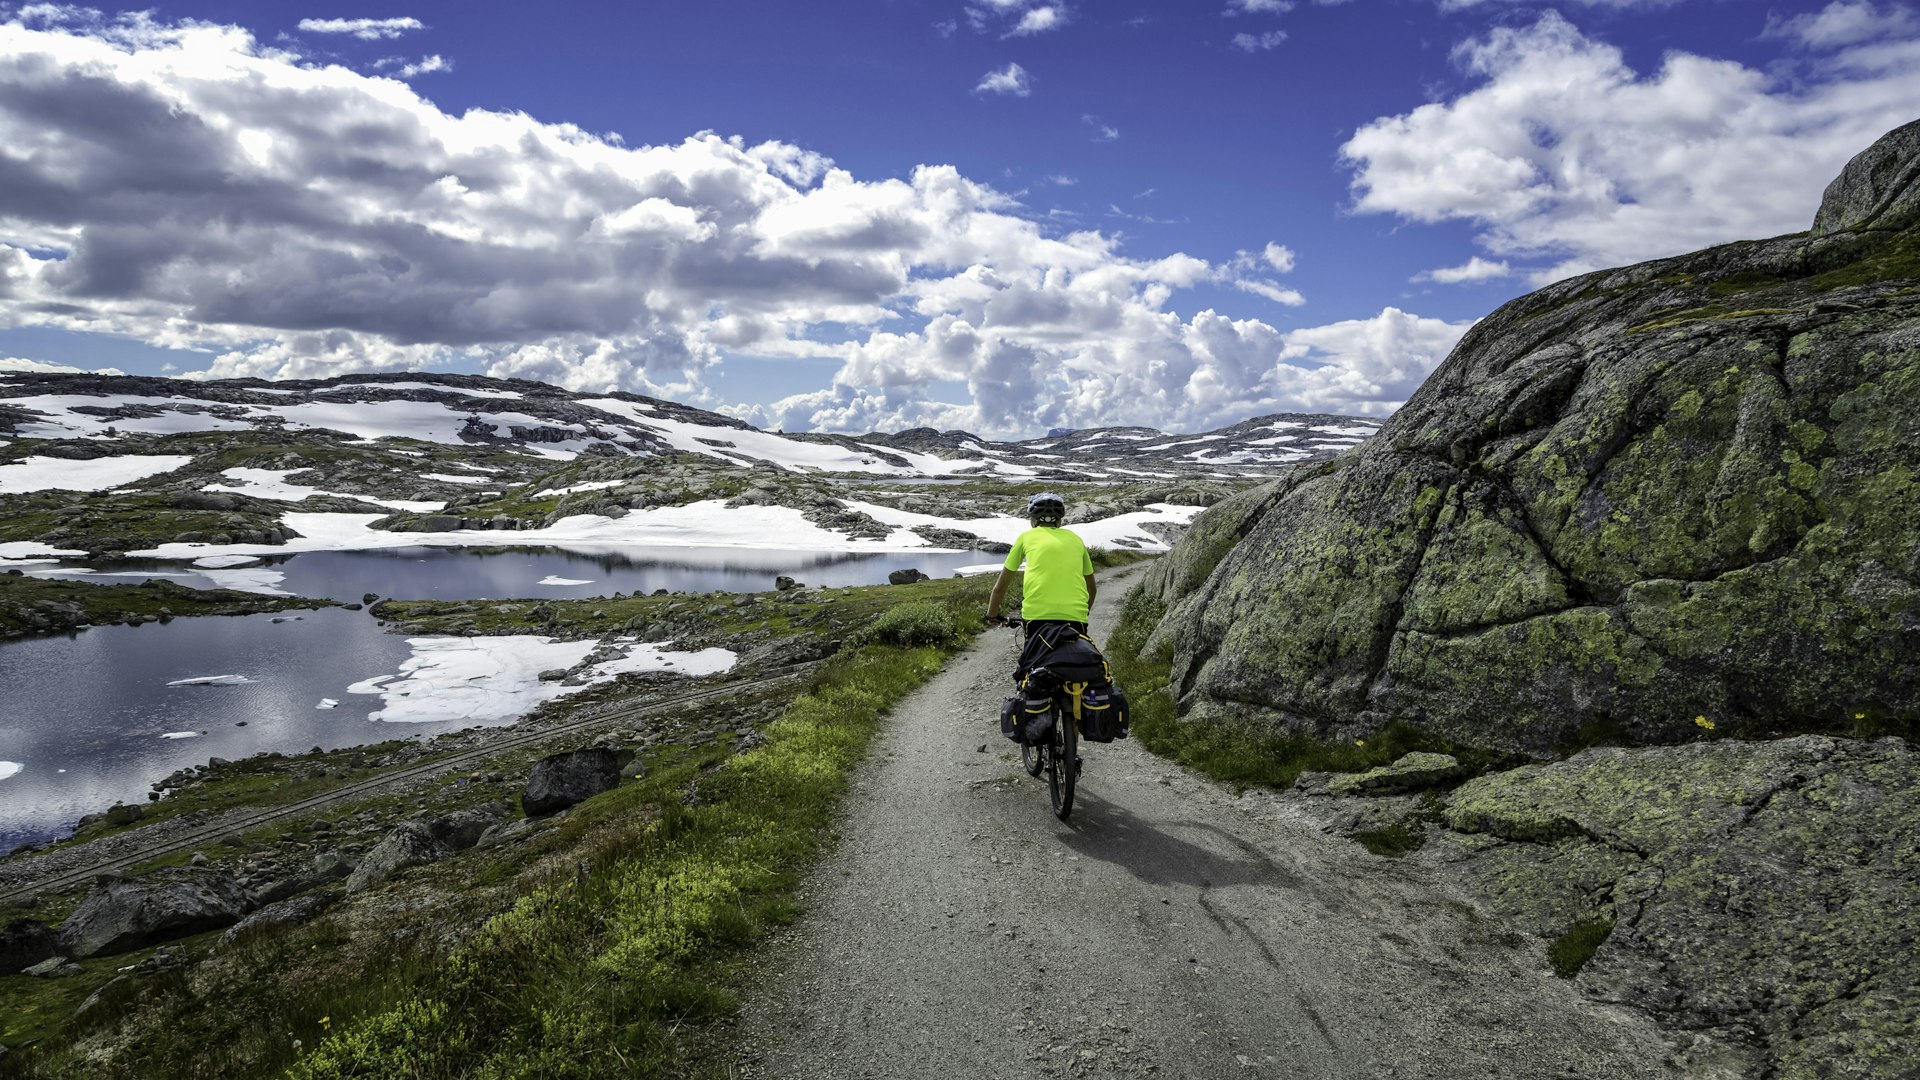 Rallarvegen route through Hardangervidda National Park